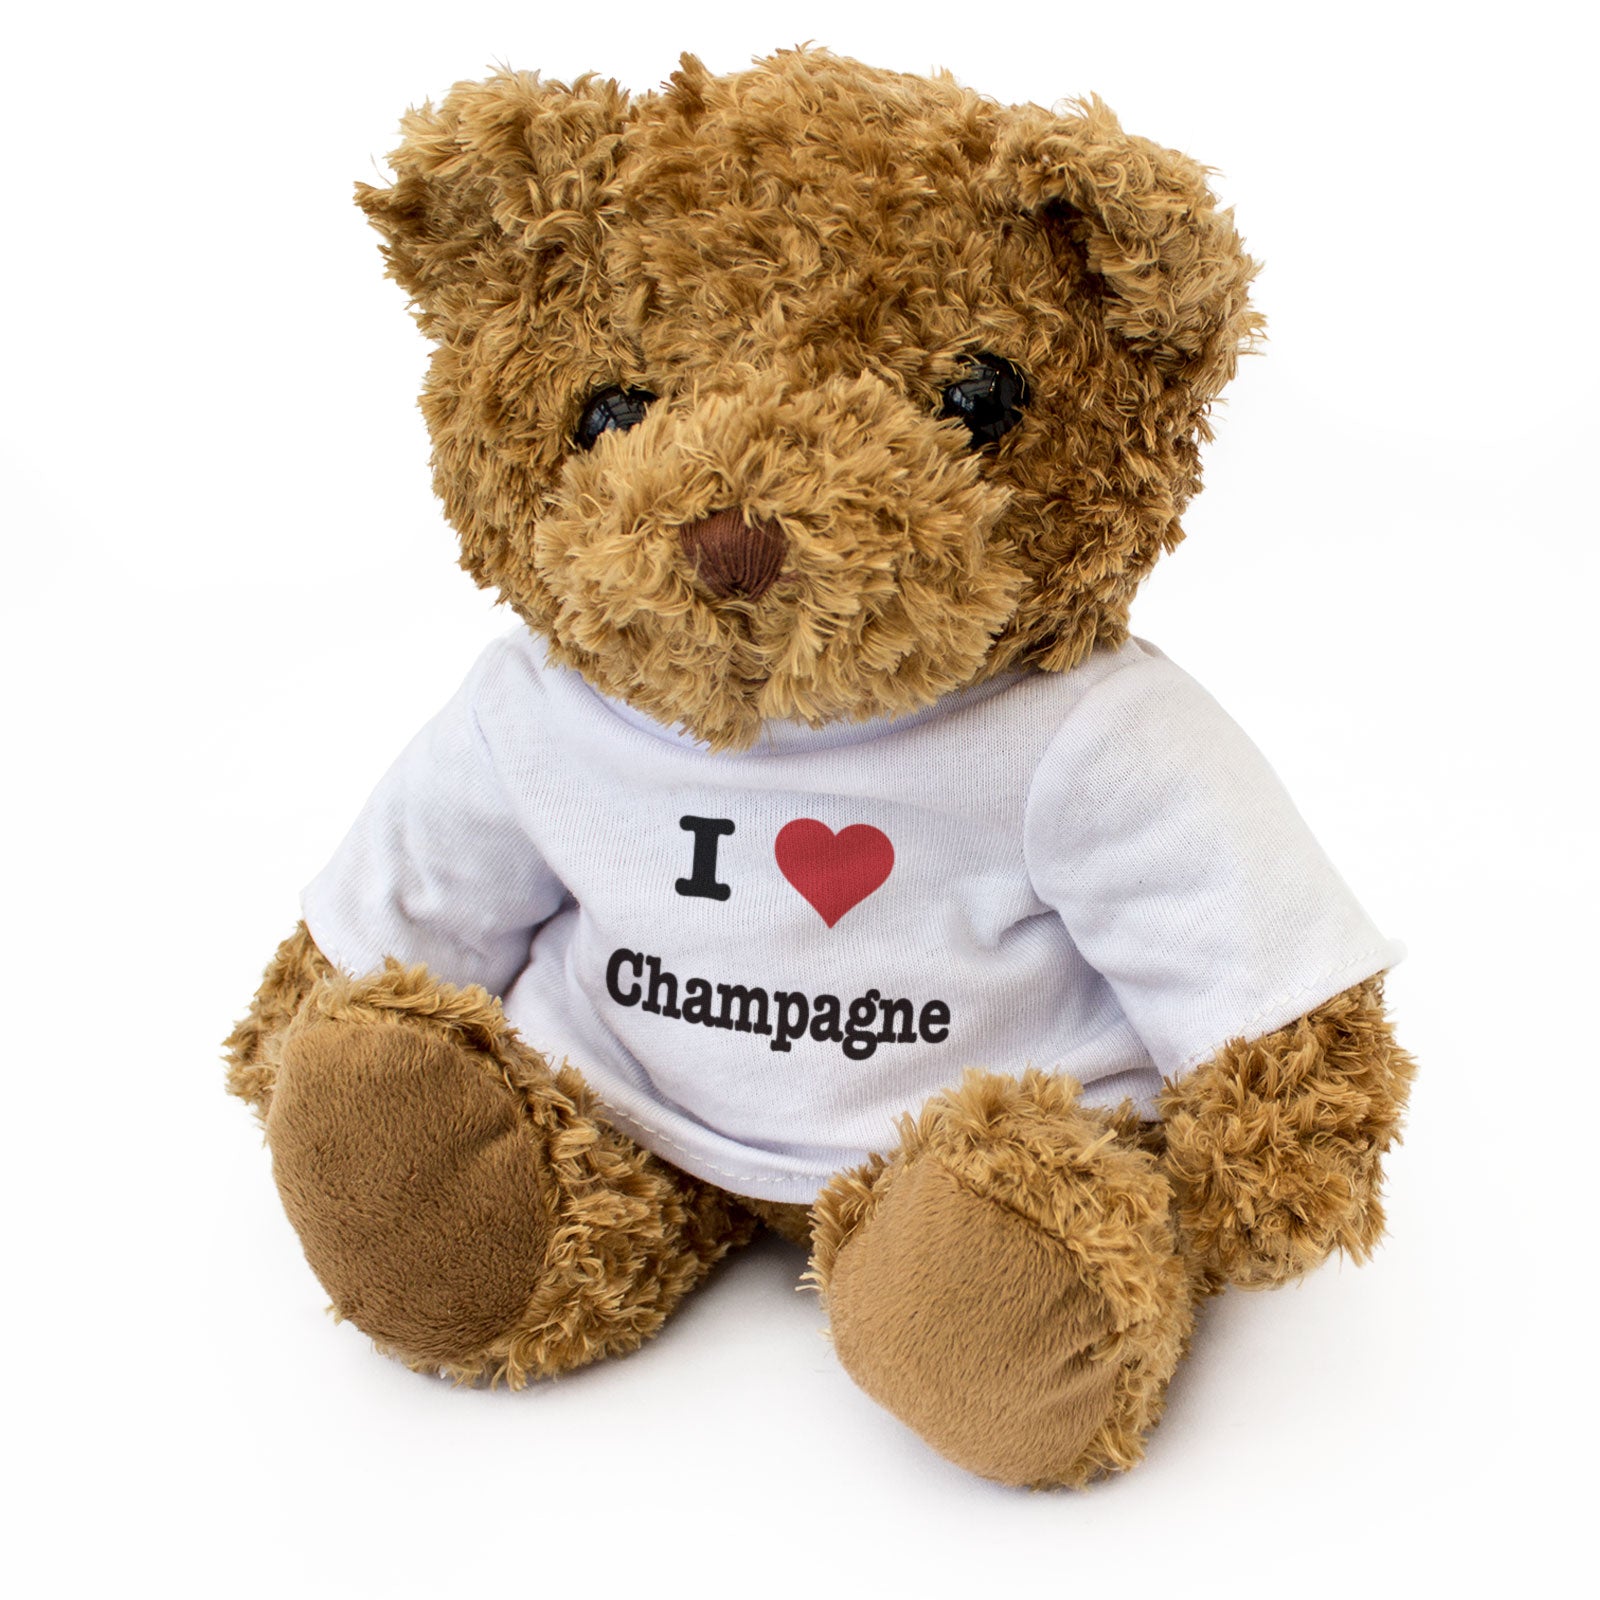 I Love Champagne - Teddy Bear